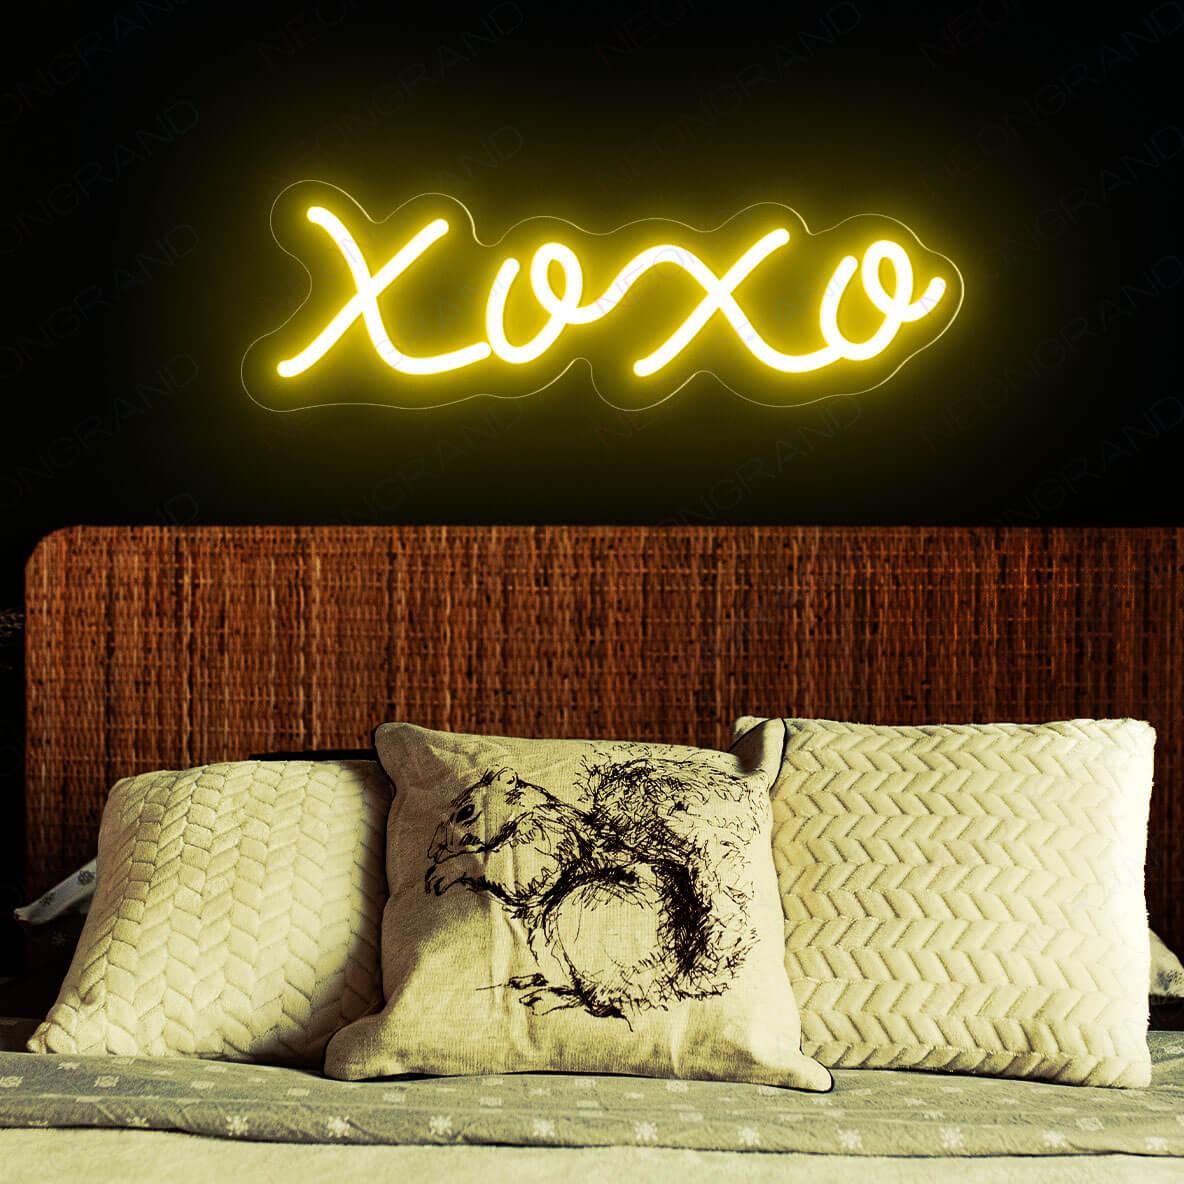 XOXO Neon Sign Hugs And Kisses Love Led Light yellow wm